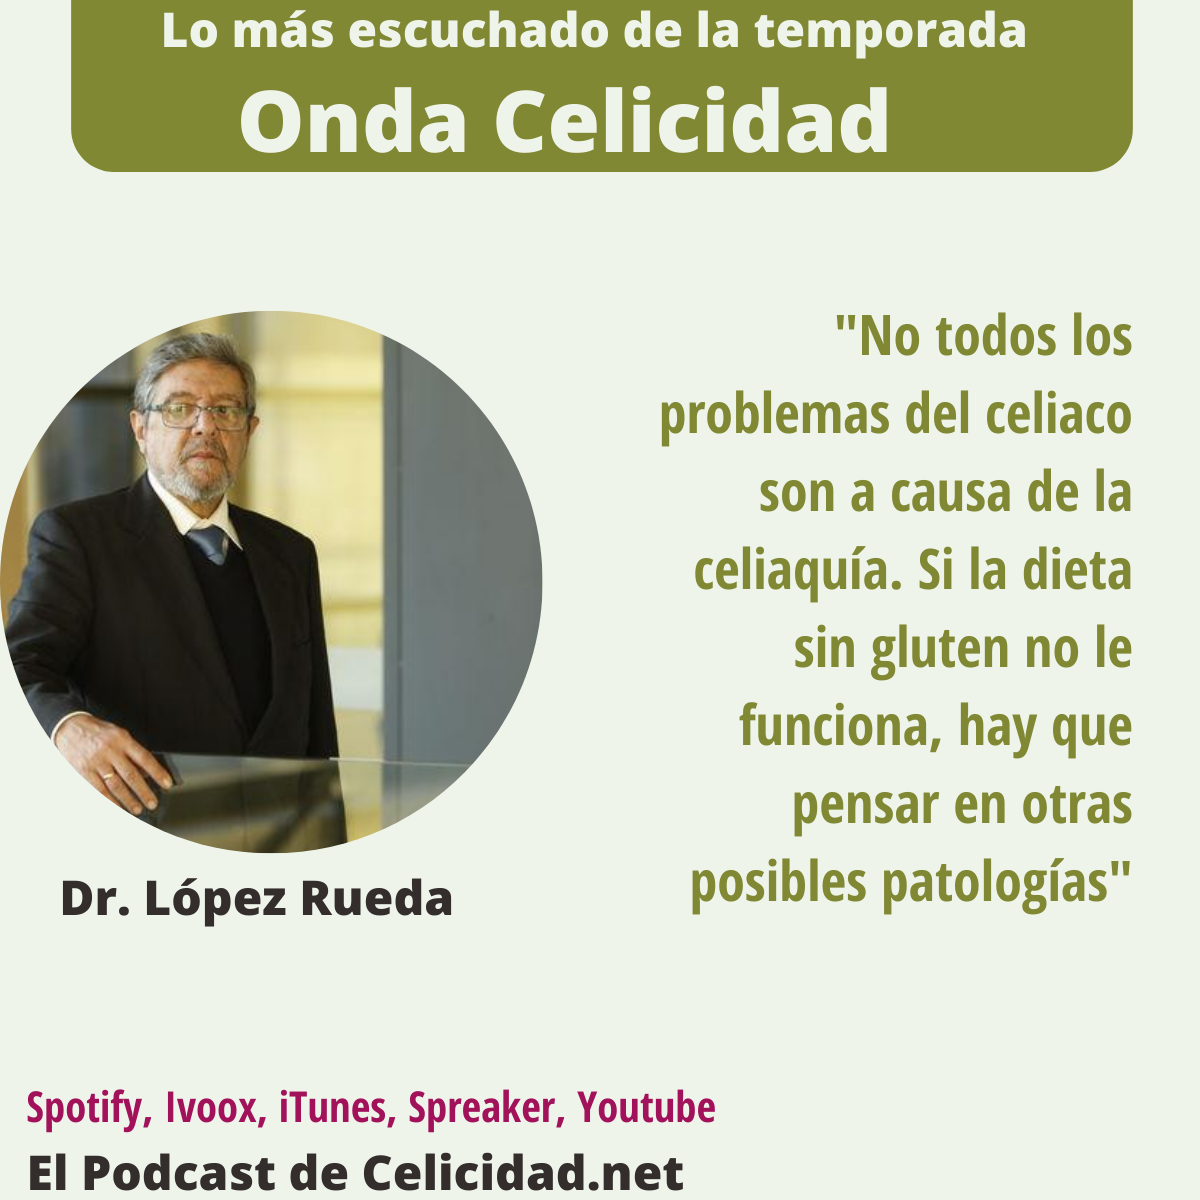 Dr. López Rueda